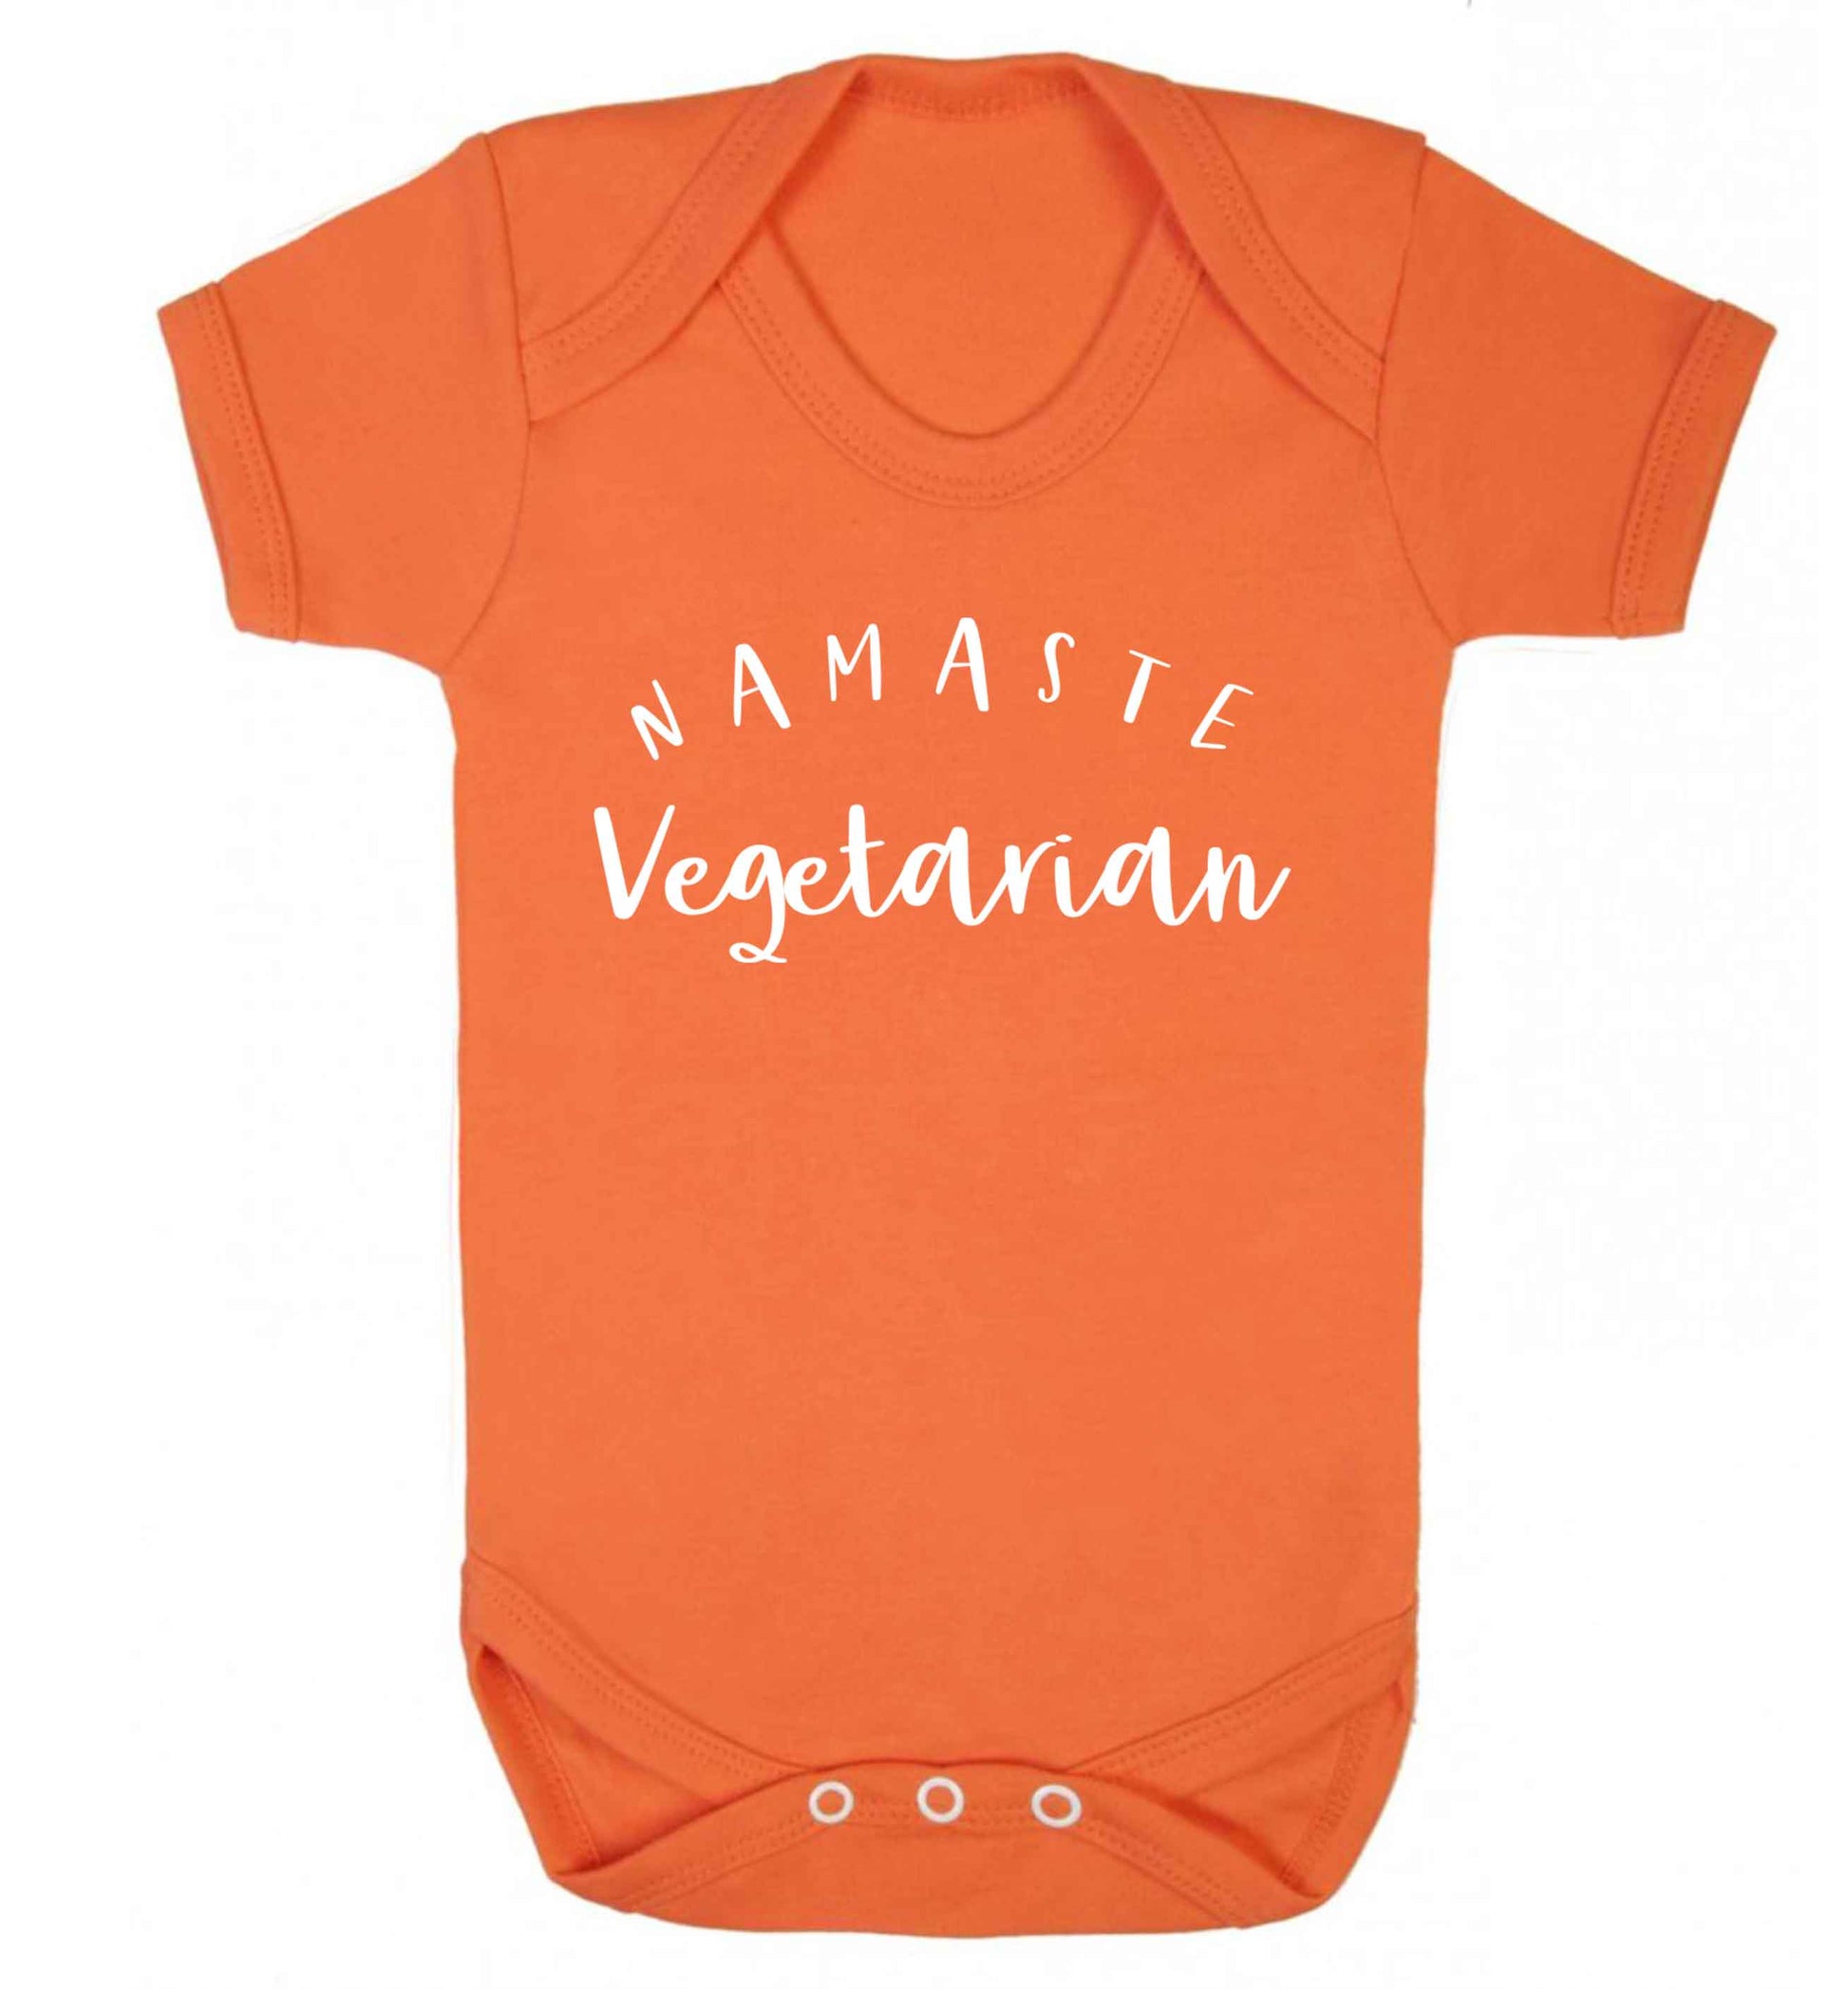 Namaste vegetarian Baby Vest orange 18-24 months